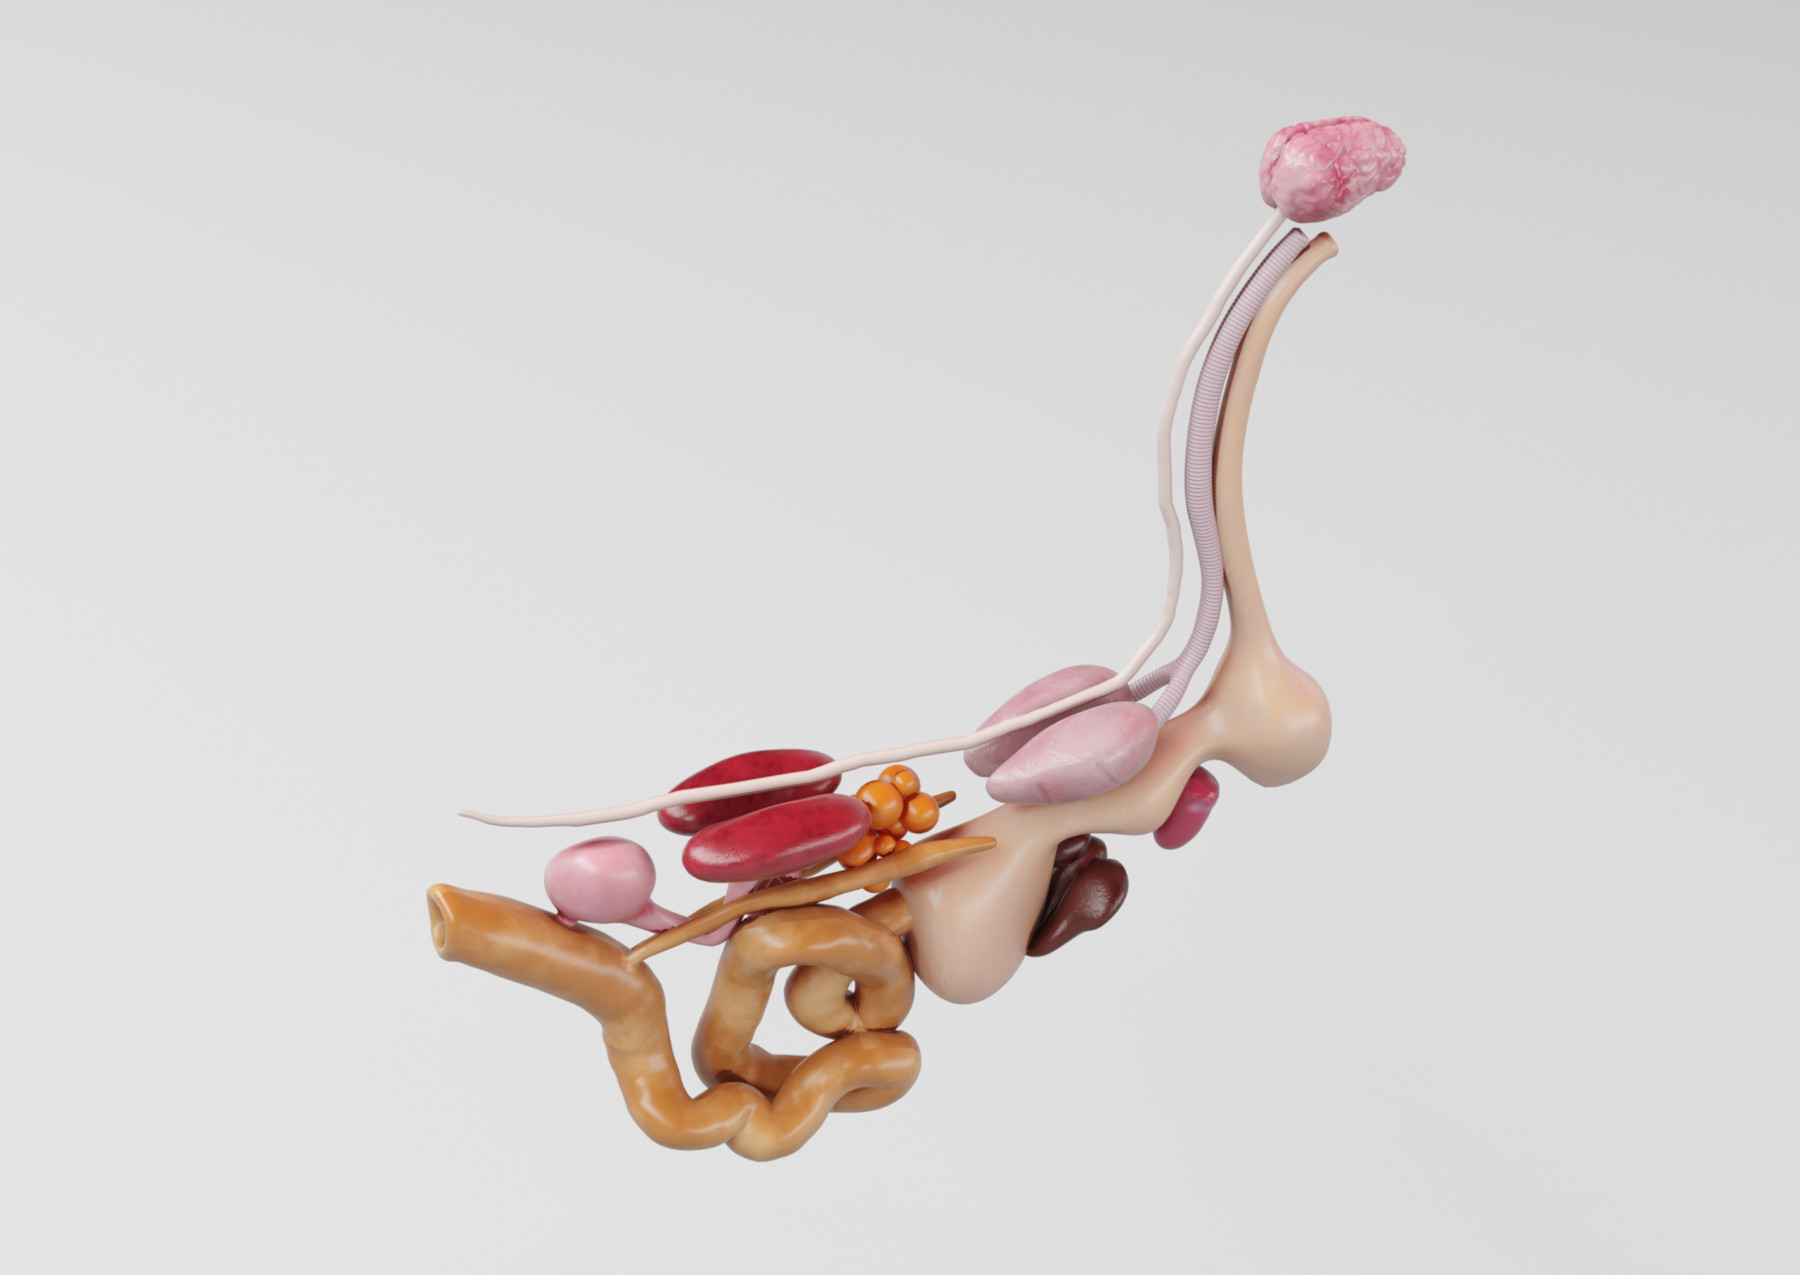 ArtStation - Chicken anatomy in T-pose for rigging